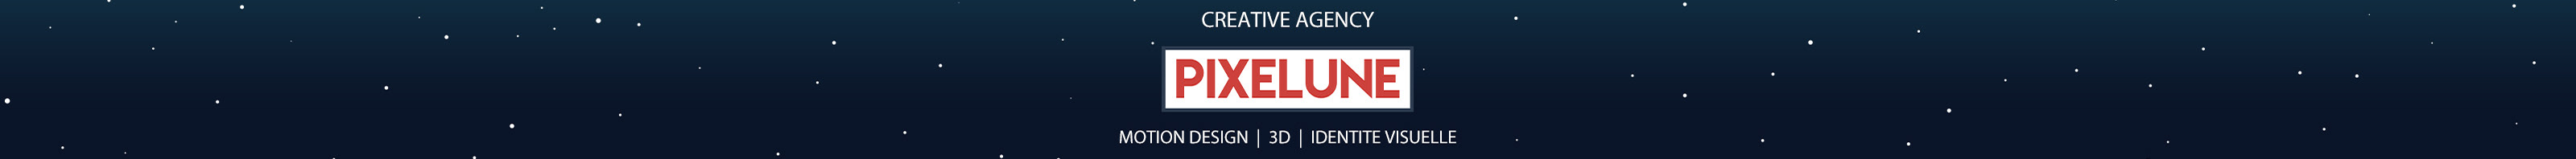 Pixelune Agency's profile banner